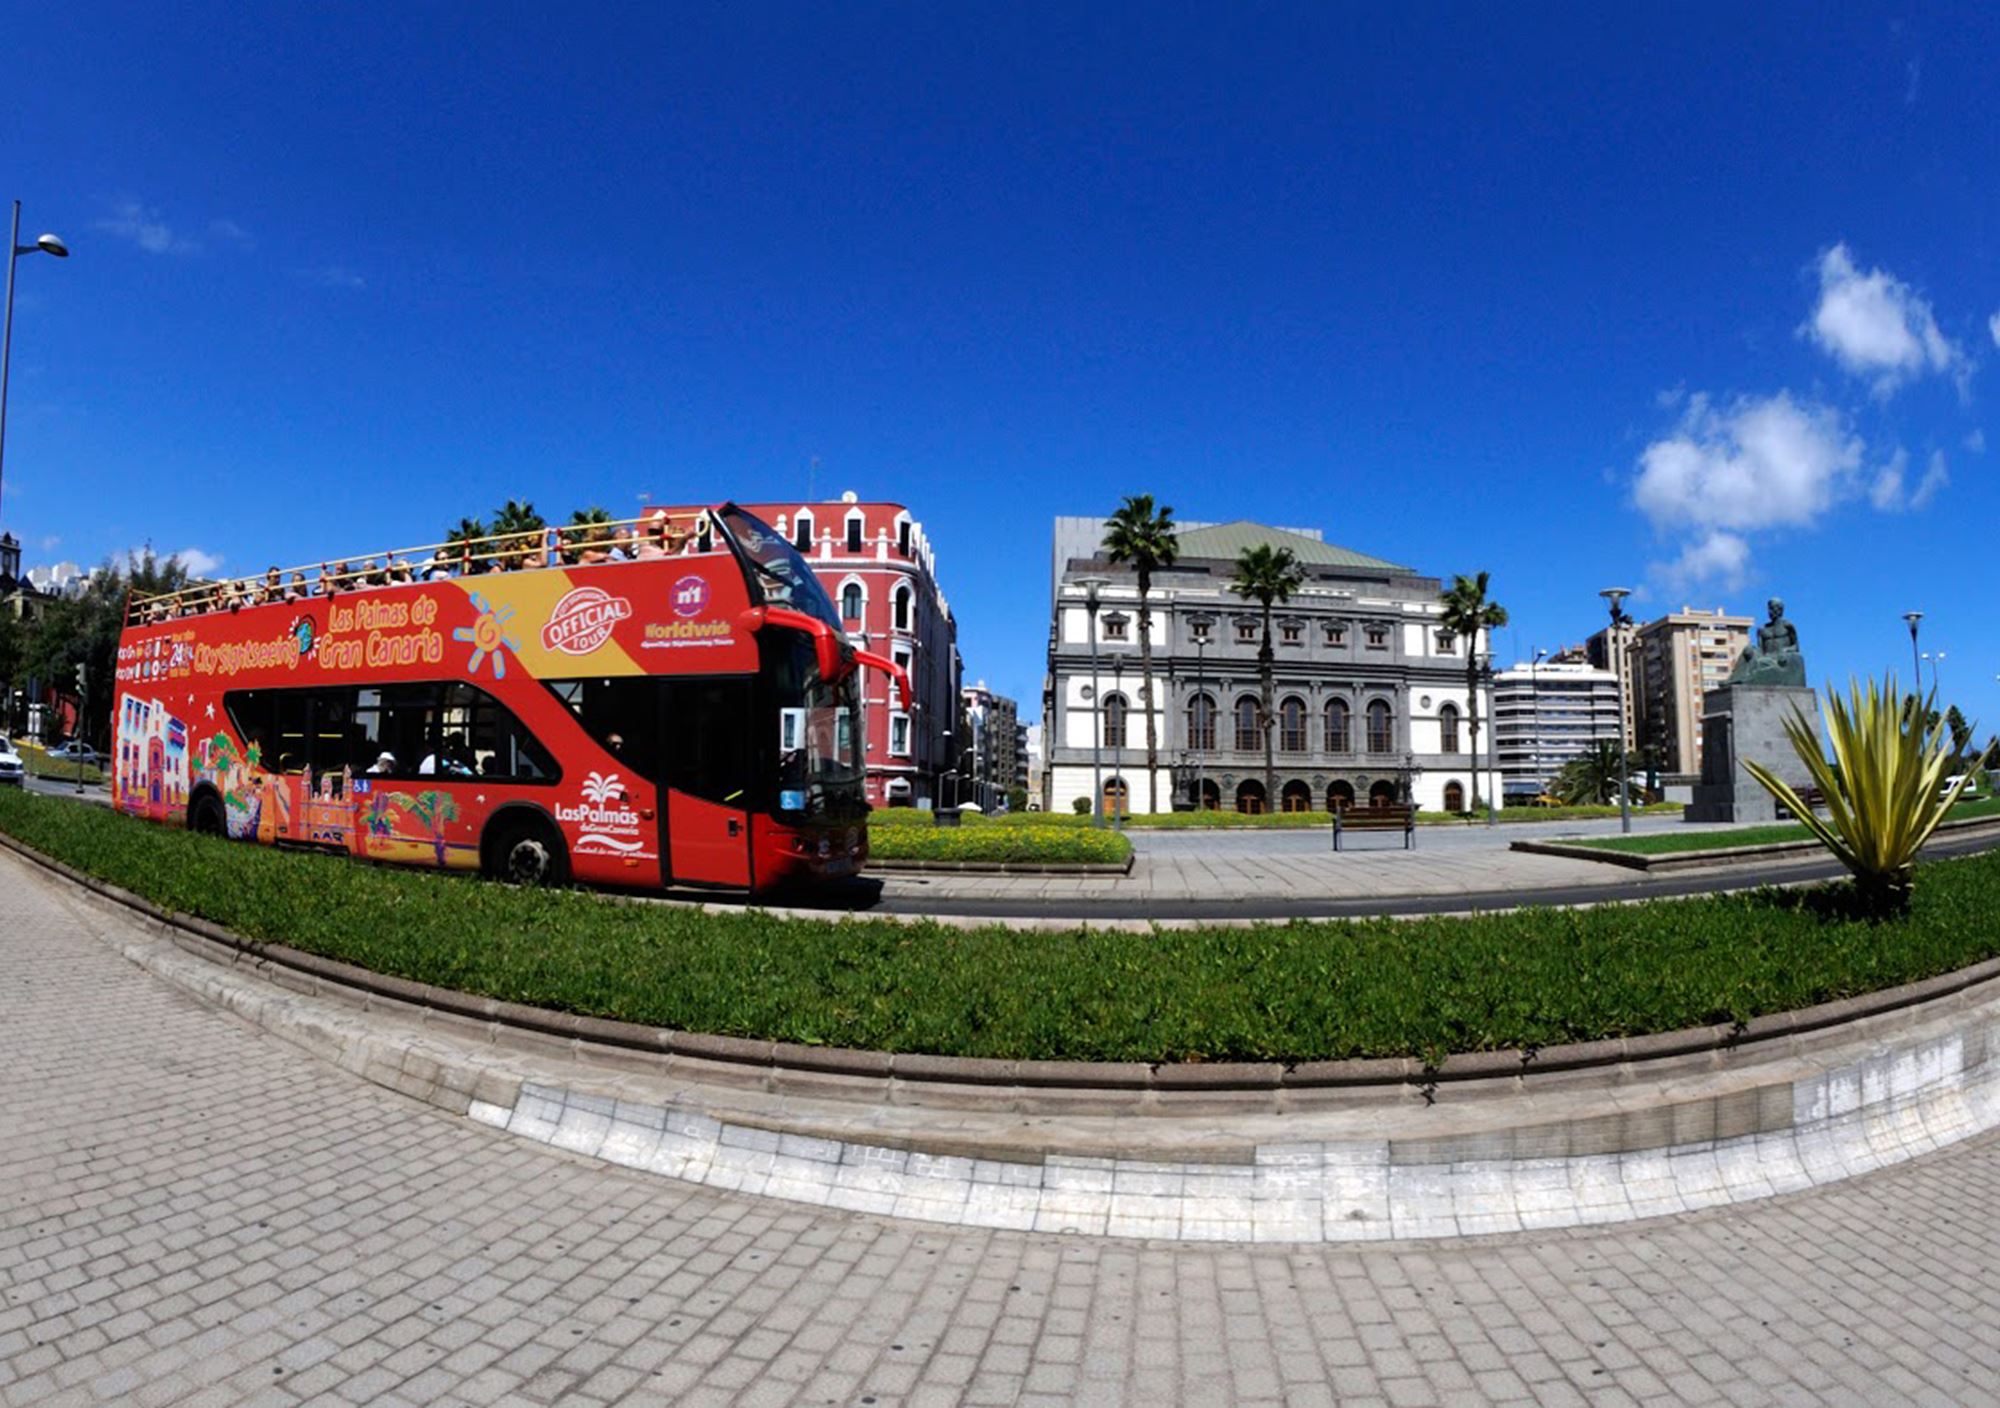 reservieren tickets besucht Touren Fahrkarte karten Touristikbus City Sightseeing Las Palmas de Gran Canaria